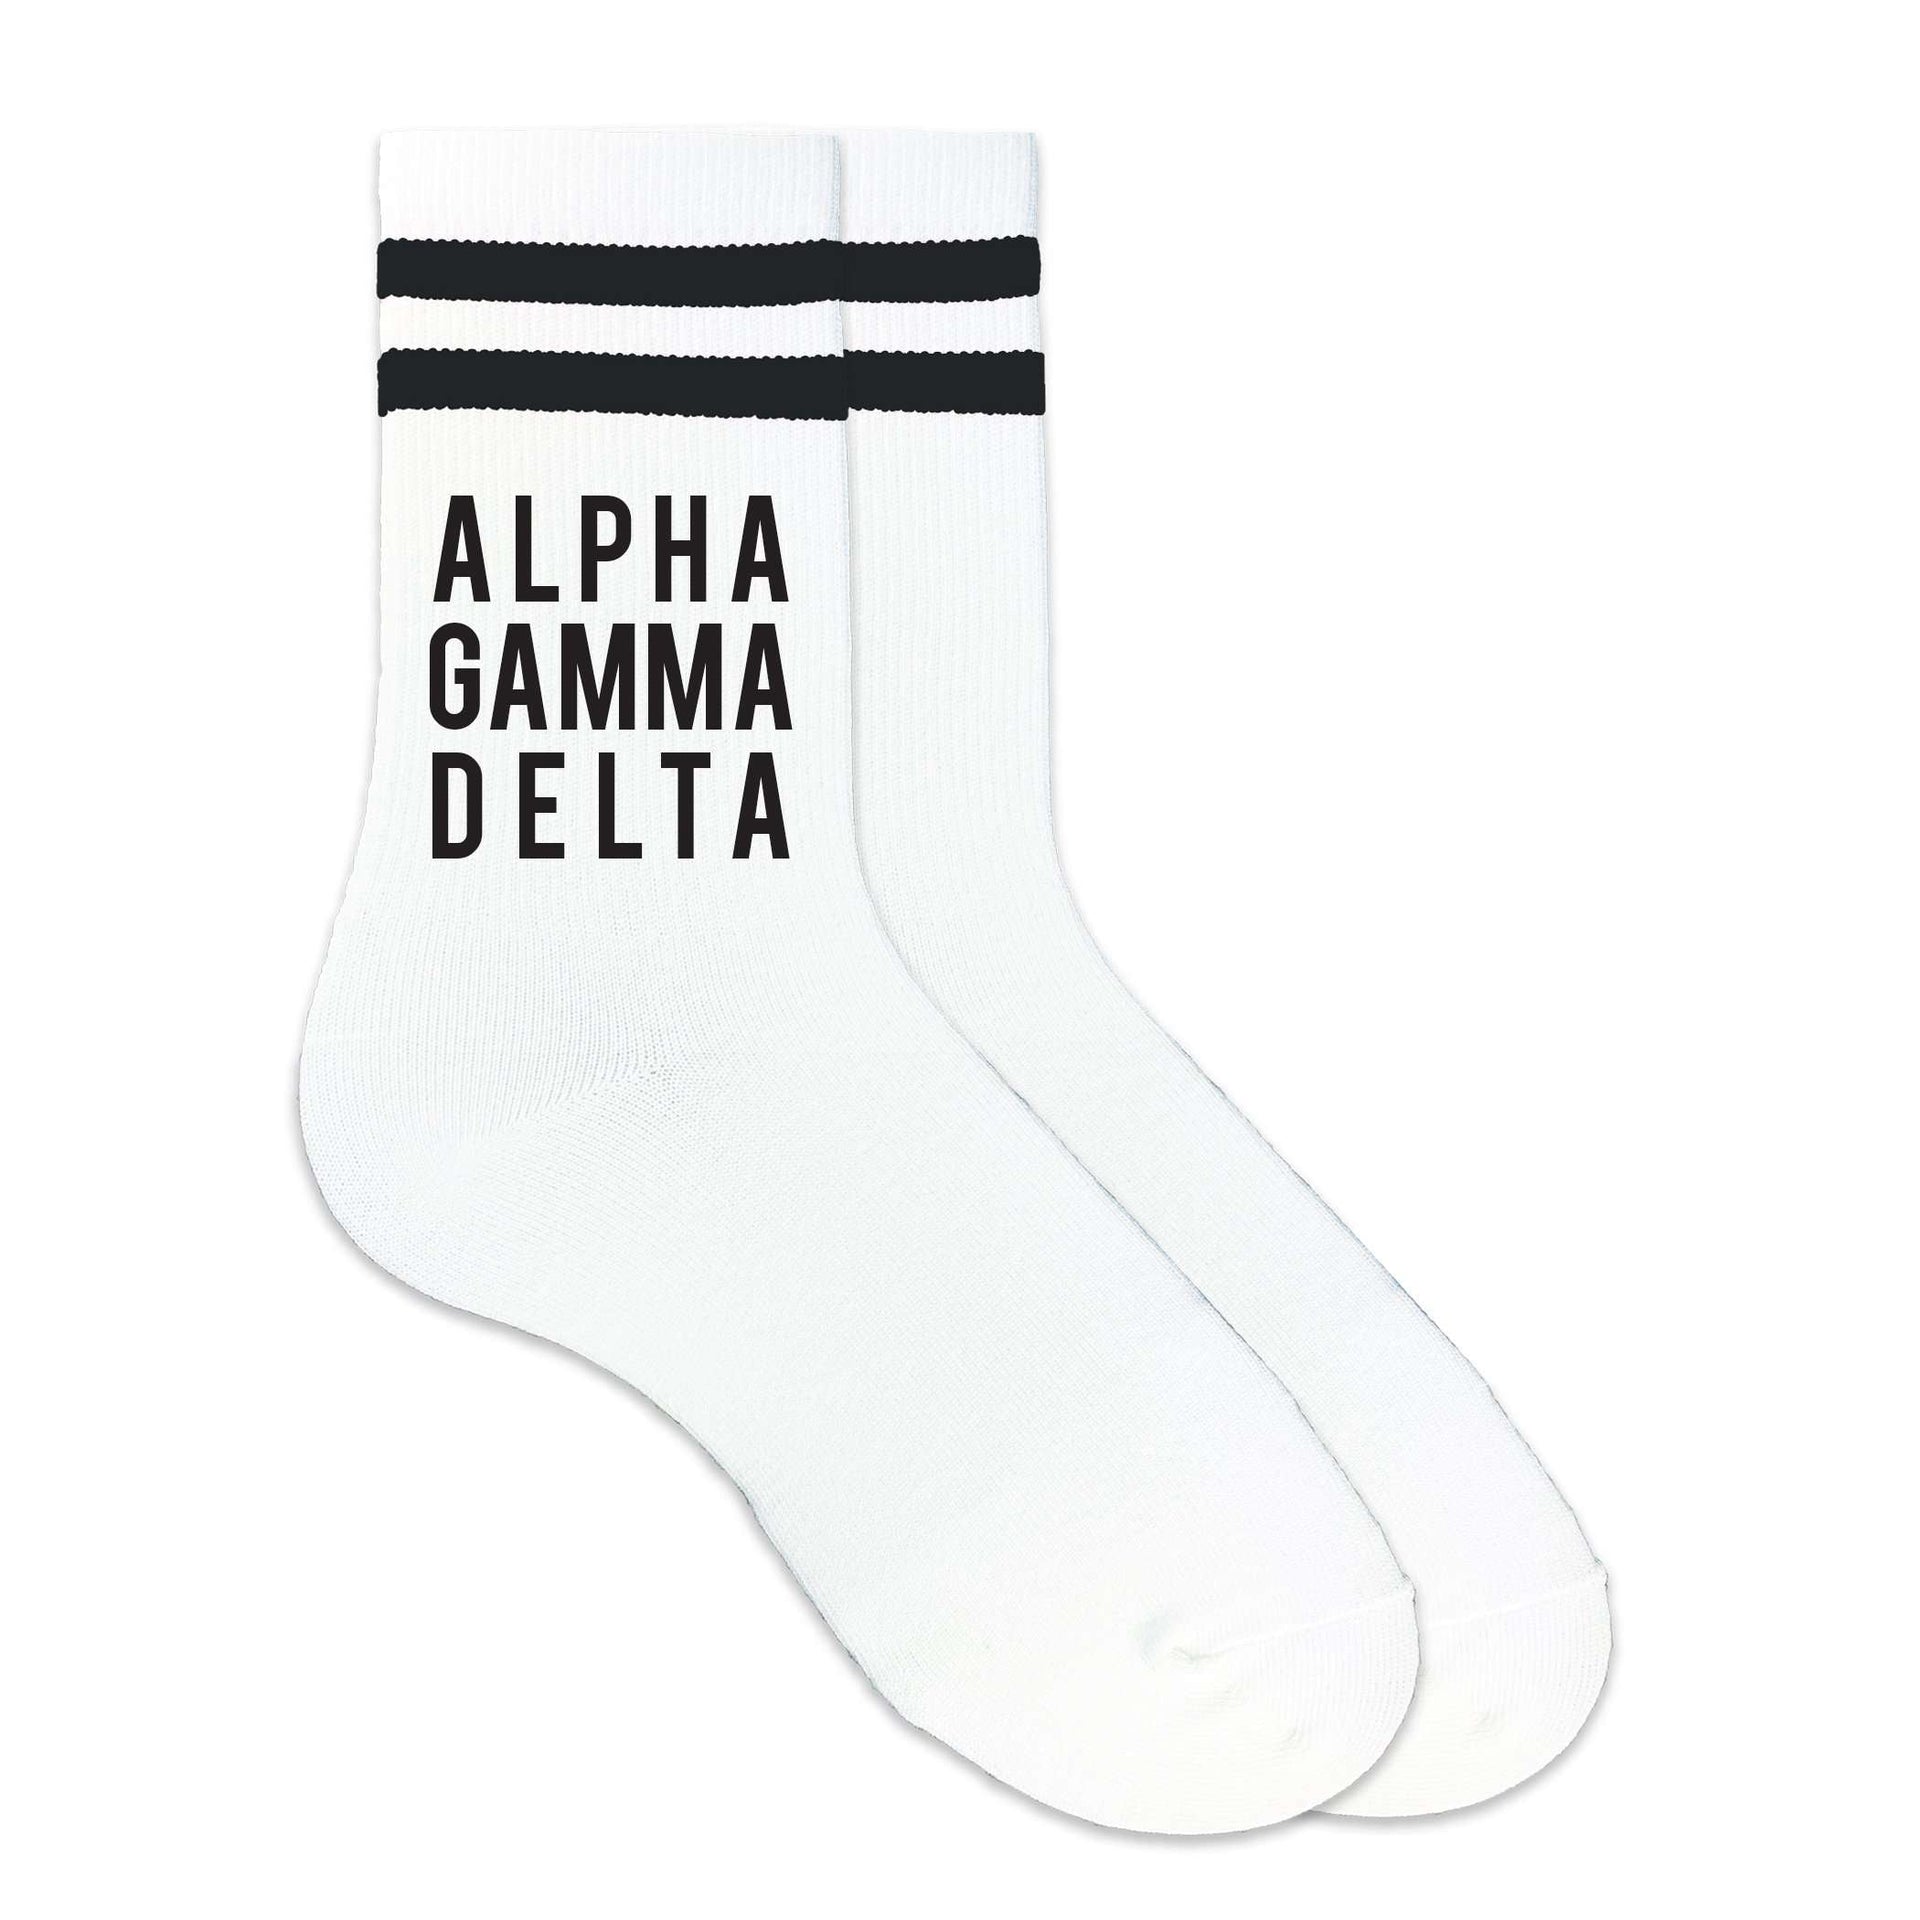 Alpha Gamma Delta sorority name in black ink digitally printed on the side of the black striped crew socks.